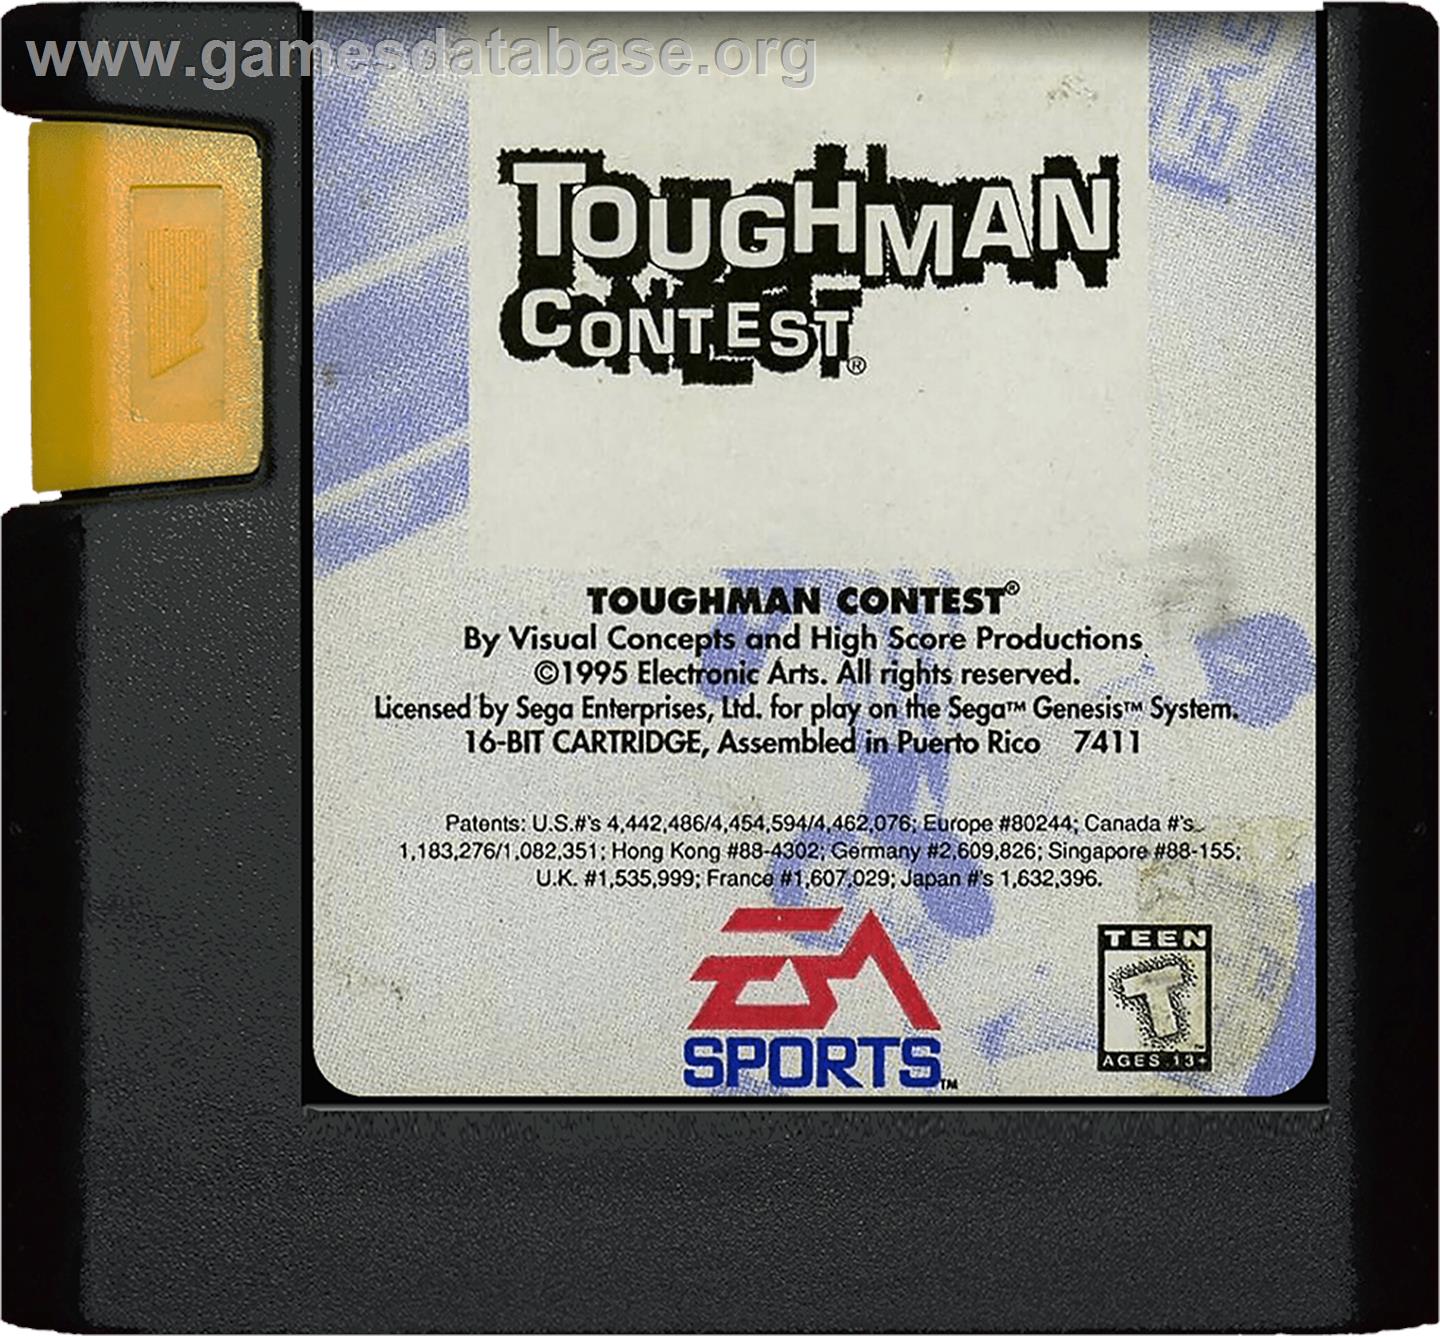 Toughman Contest - Sega Genesis - Artwork - Cartridge